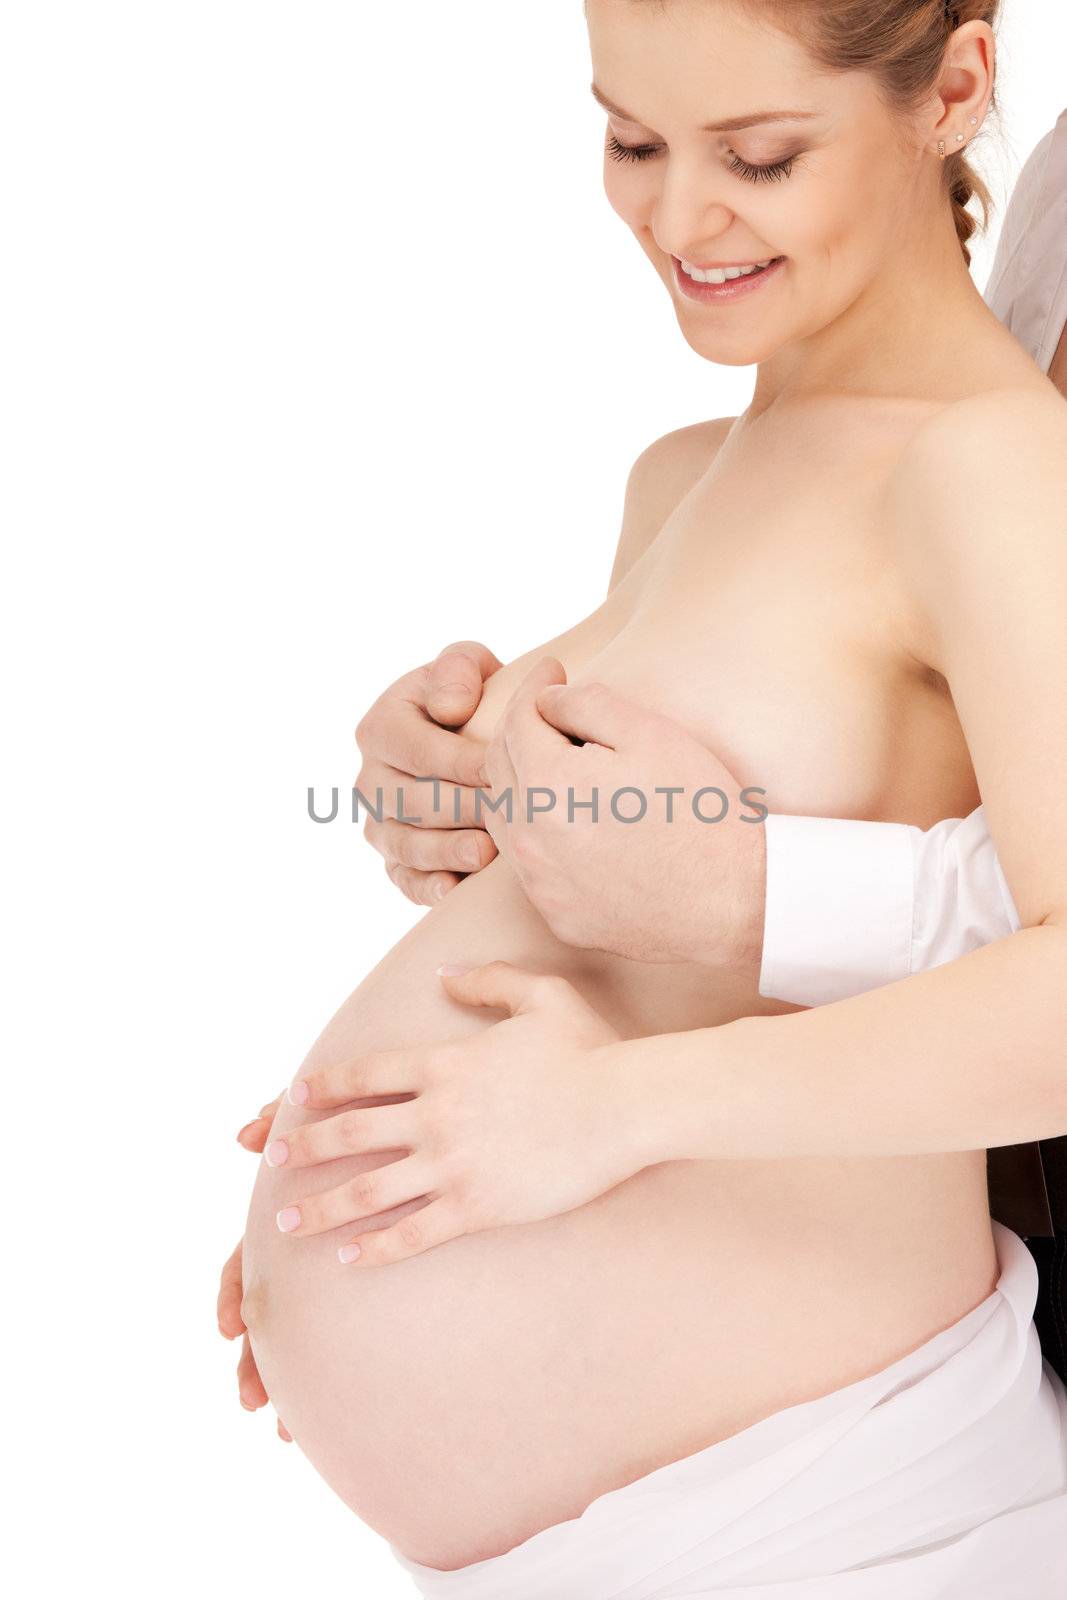 pregnant woman by dolgachov